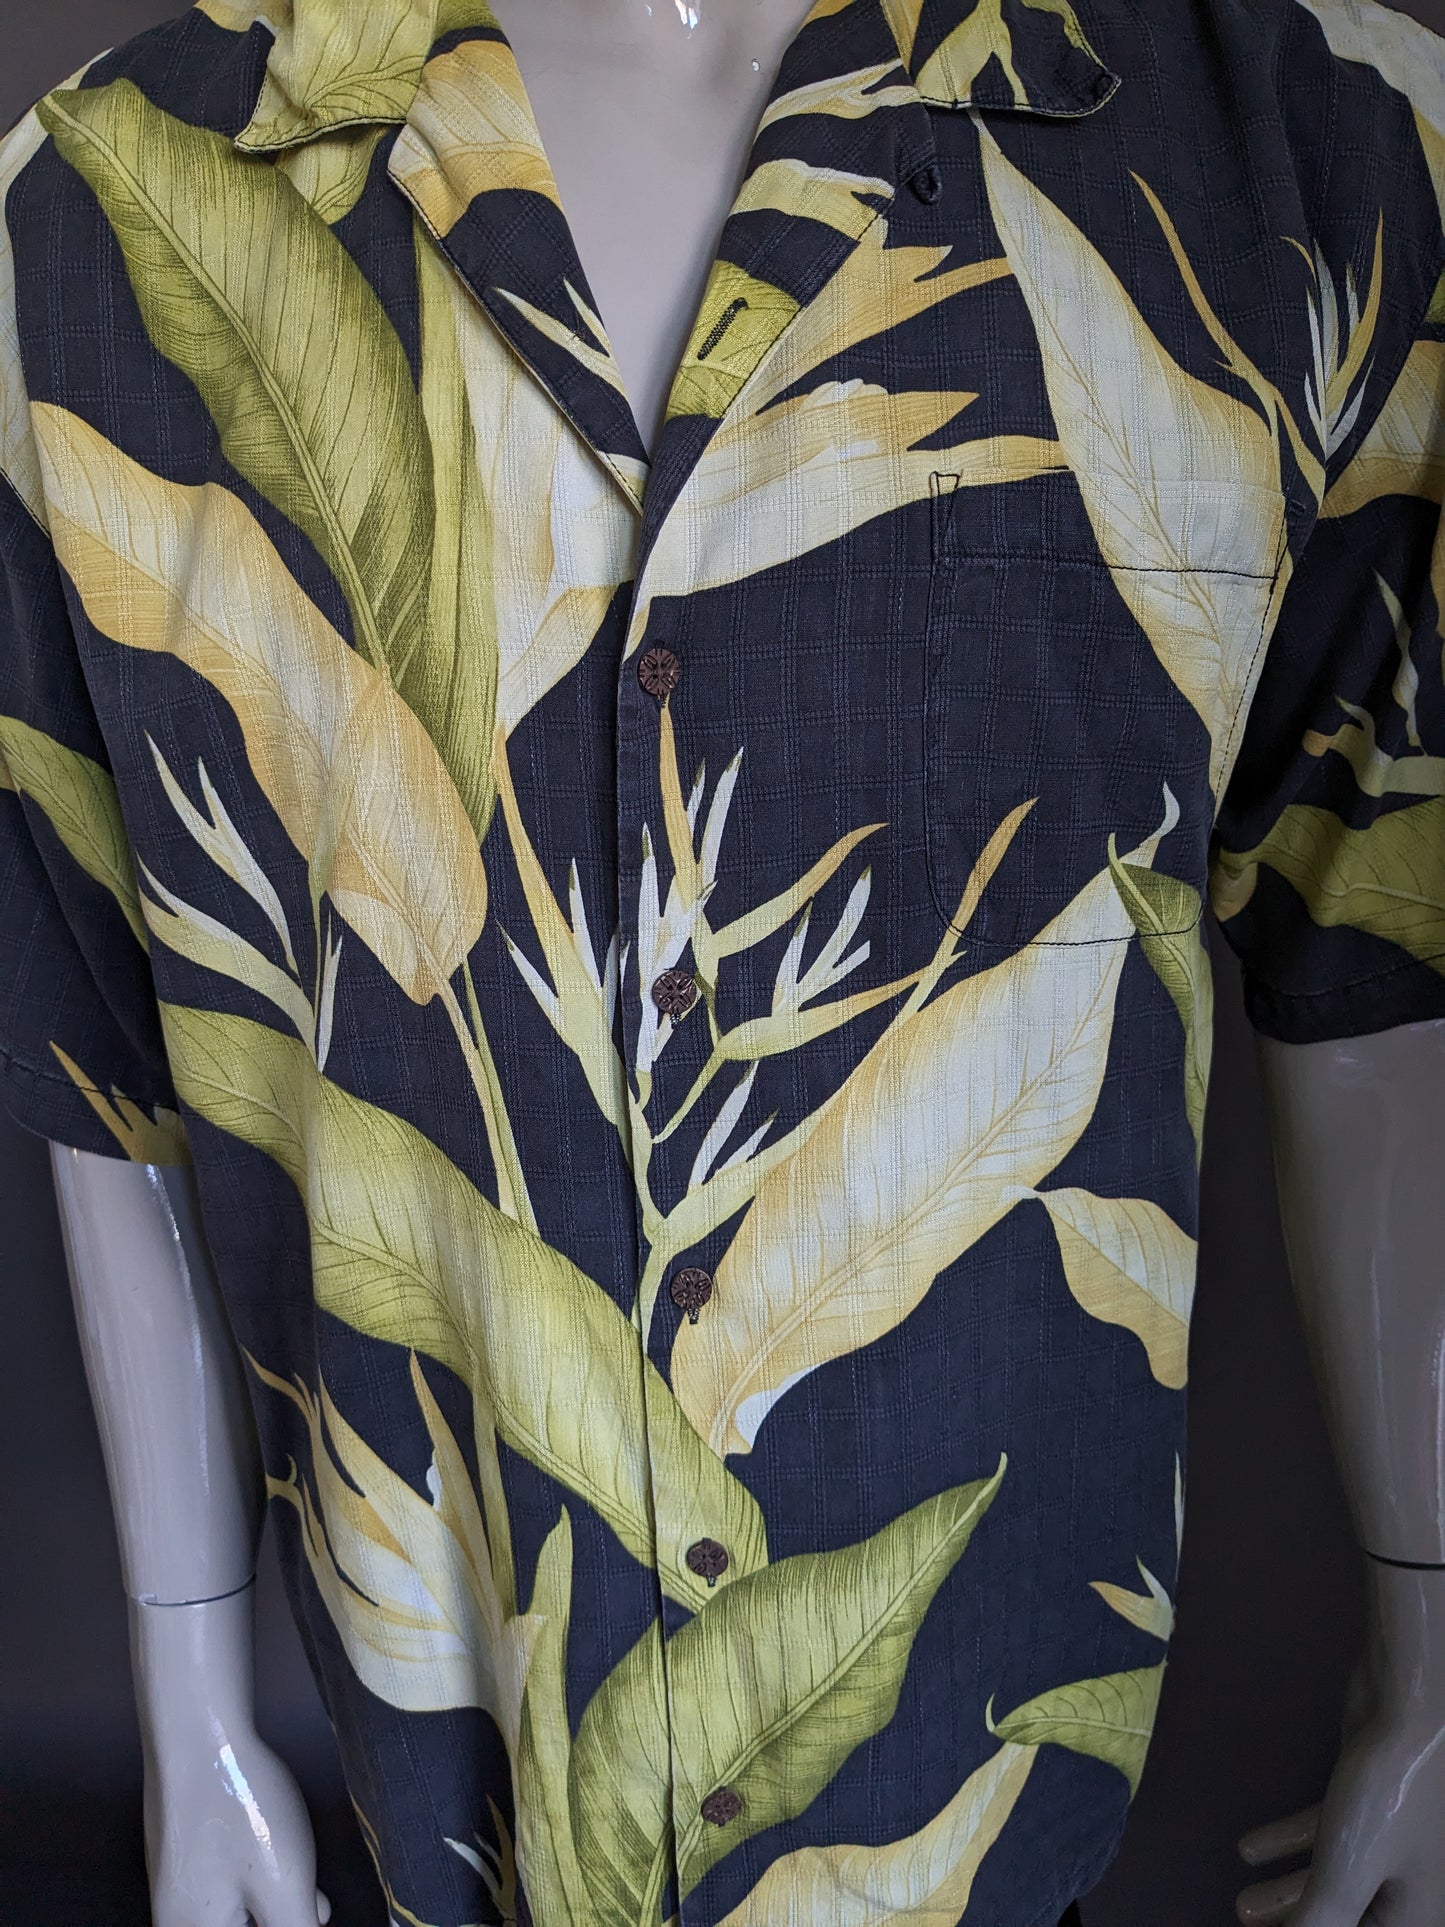 Tommy Bahama Original Silk Hawaii Shirt Short Sleeve. Yellow green black print. Size XL.